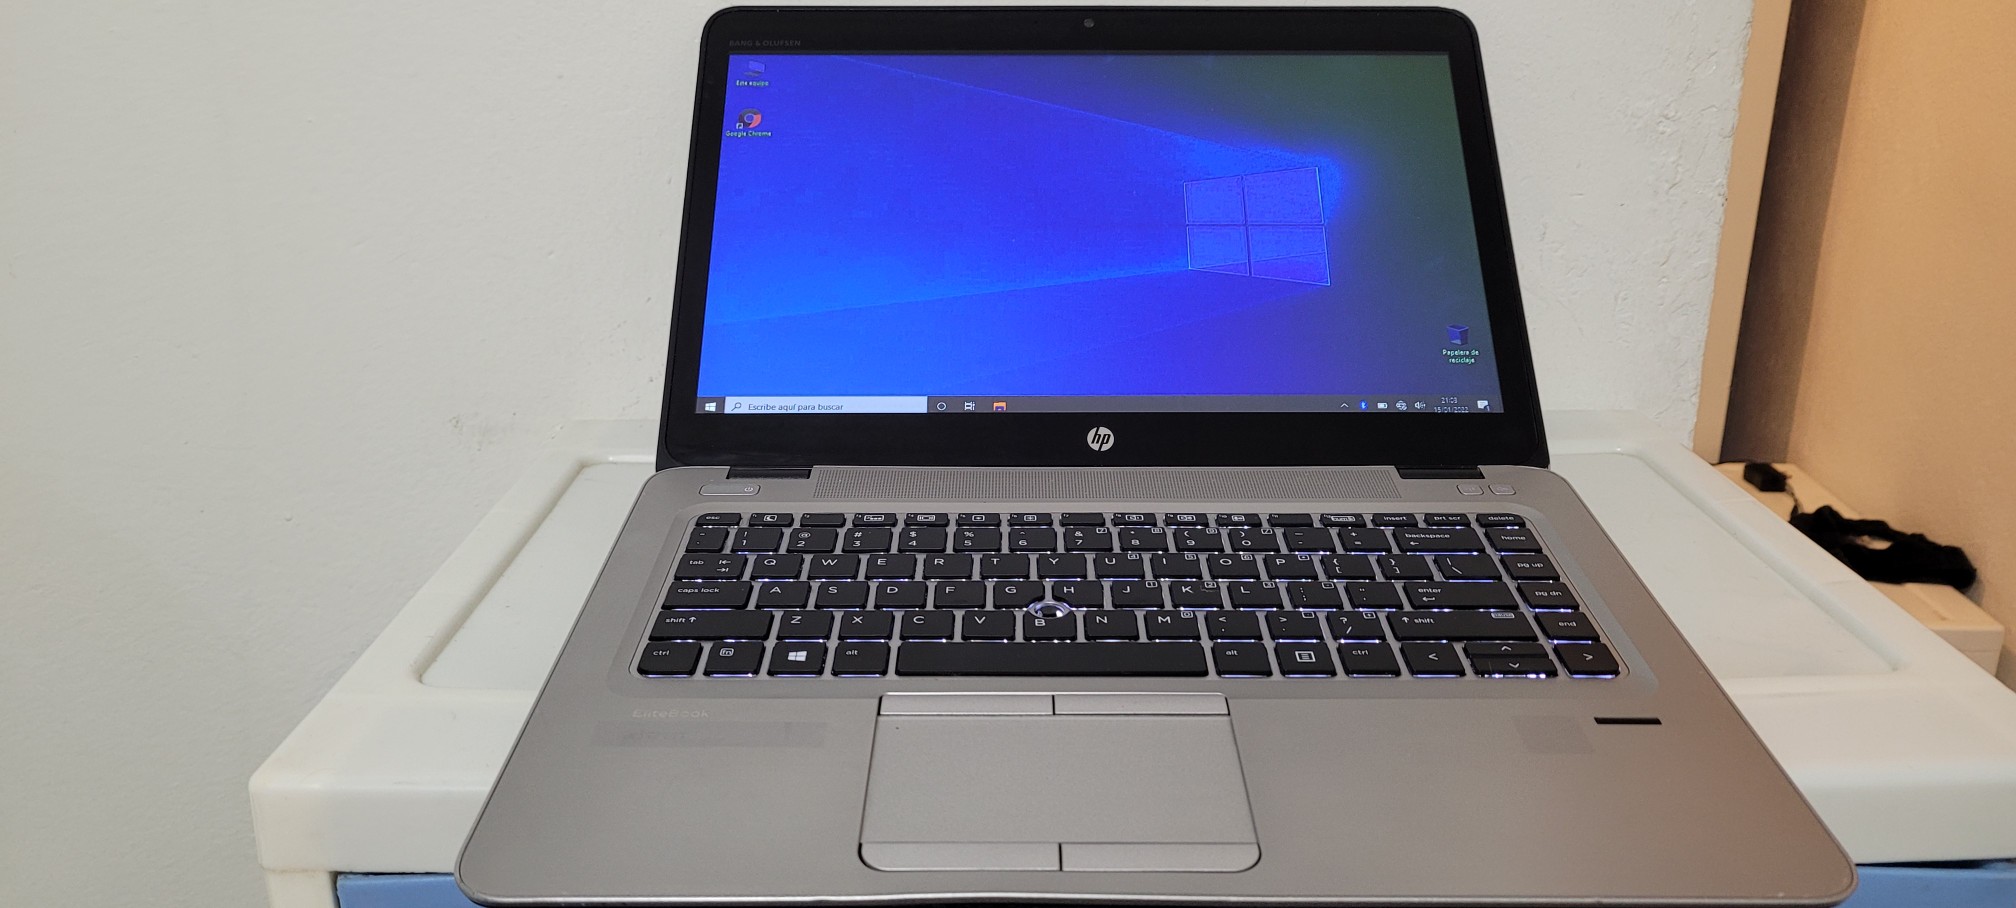 computadoras y laptops - Laptop hp Touch 14 Pulg Core i5 7ma Gen Ram 8gb ddr4 Disco 500gb Full